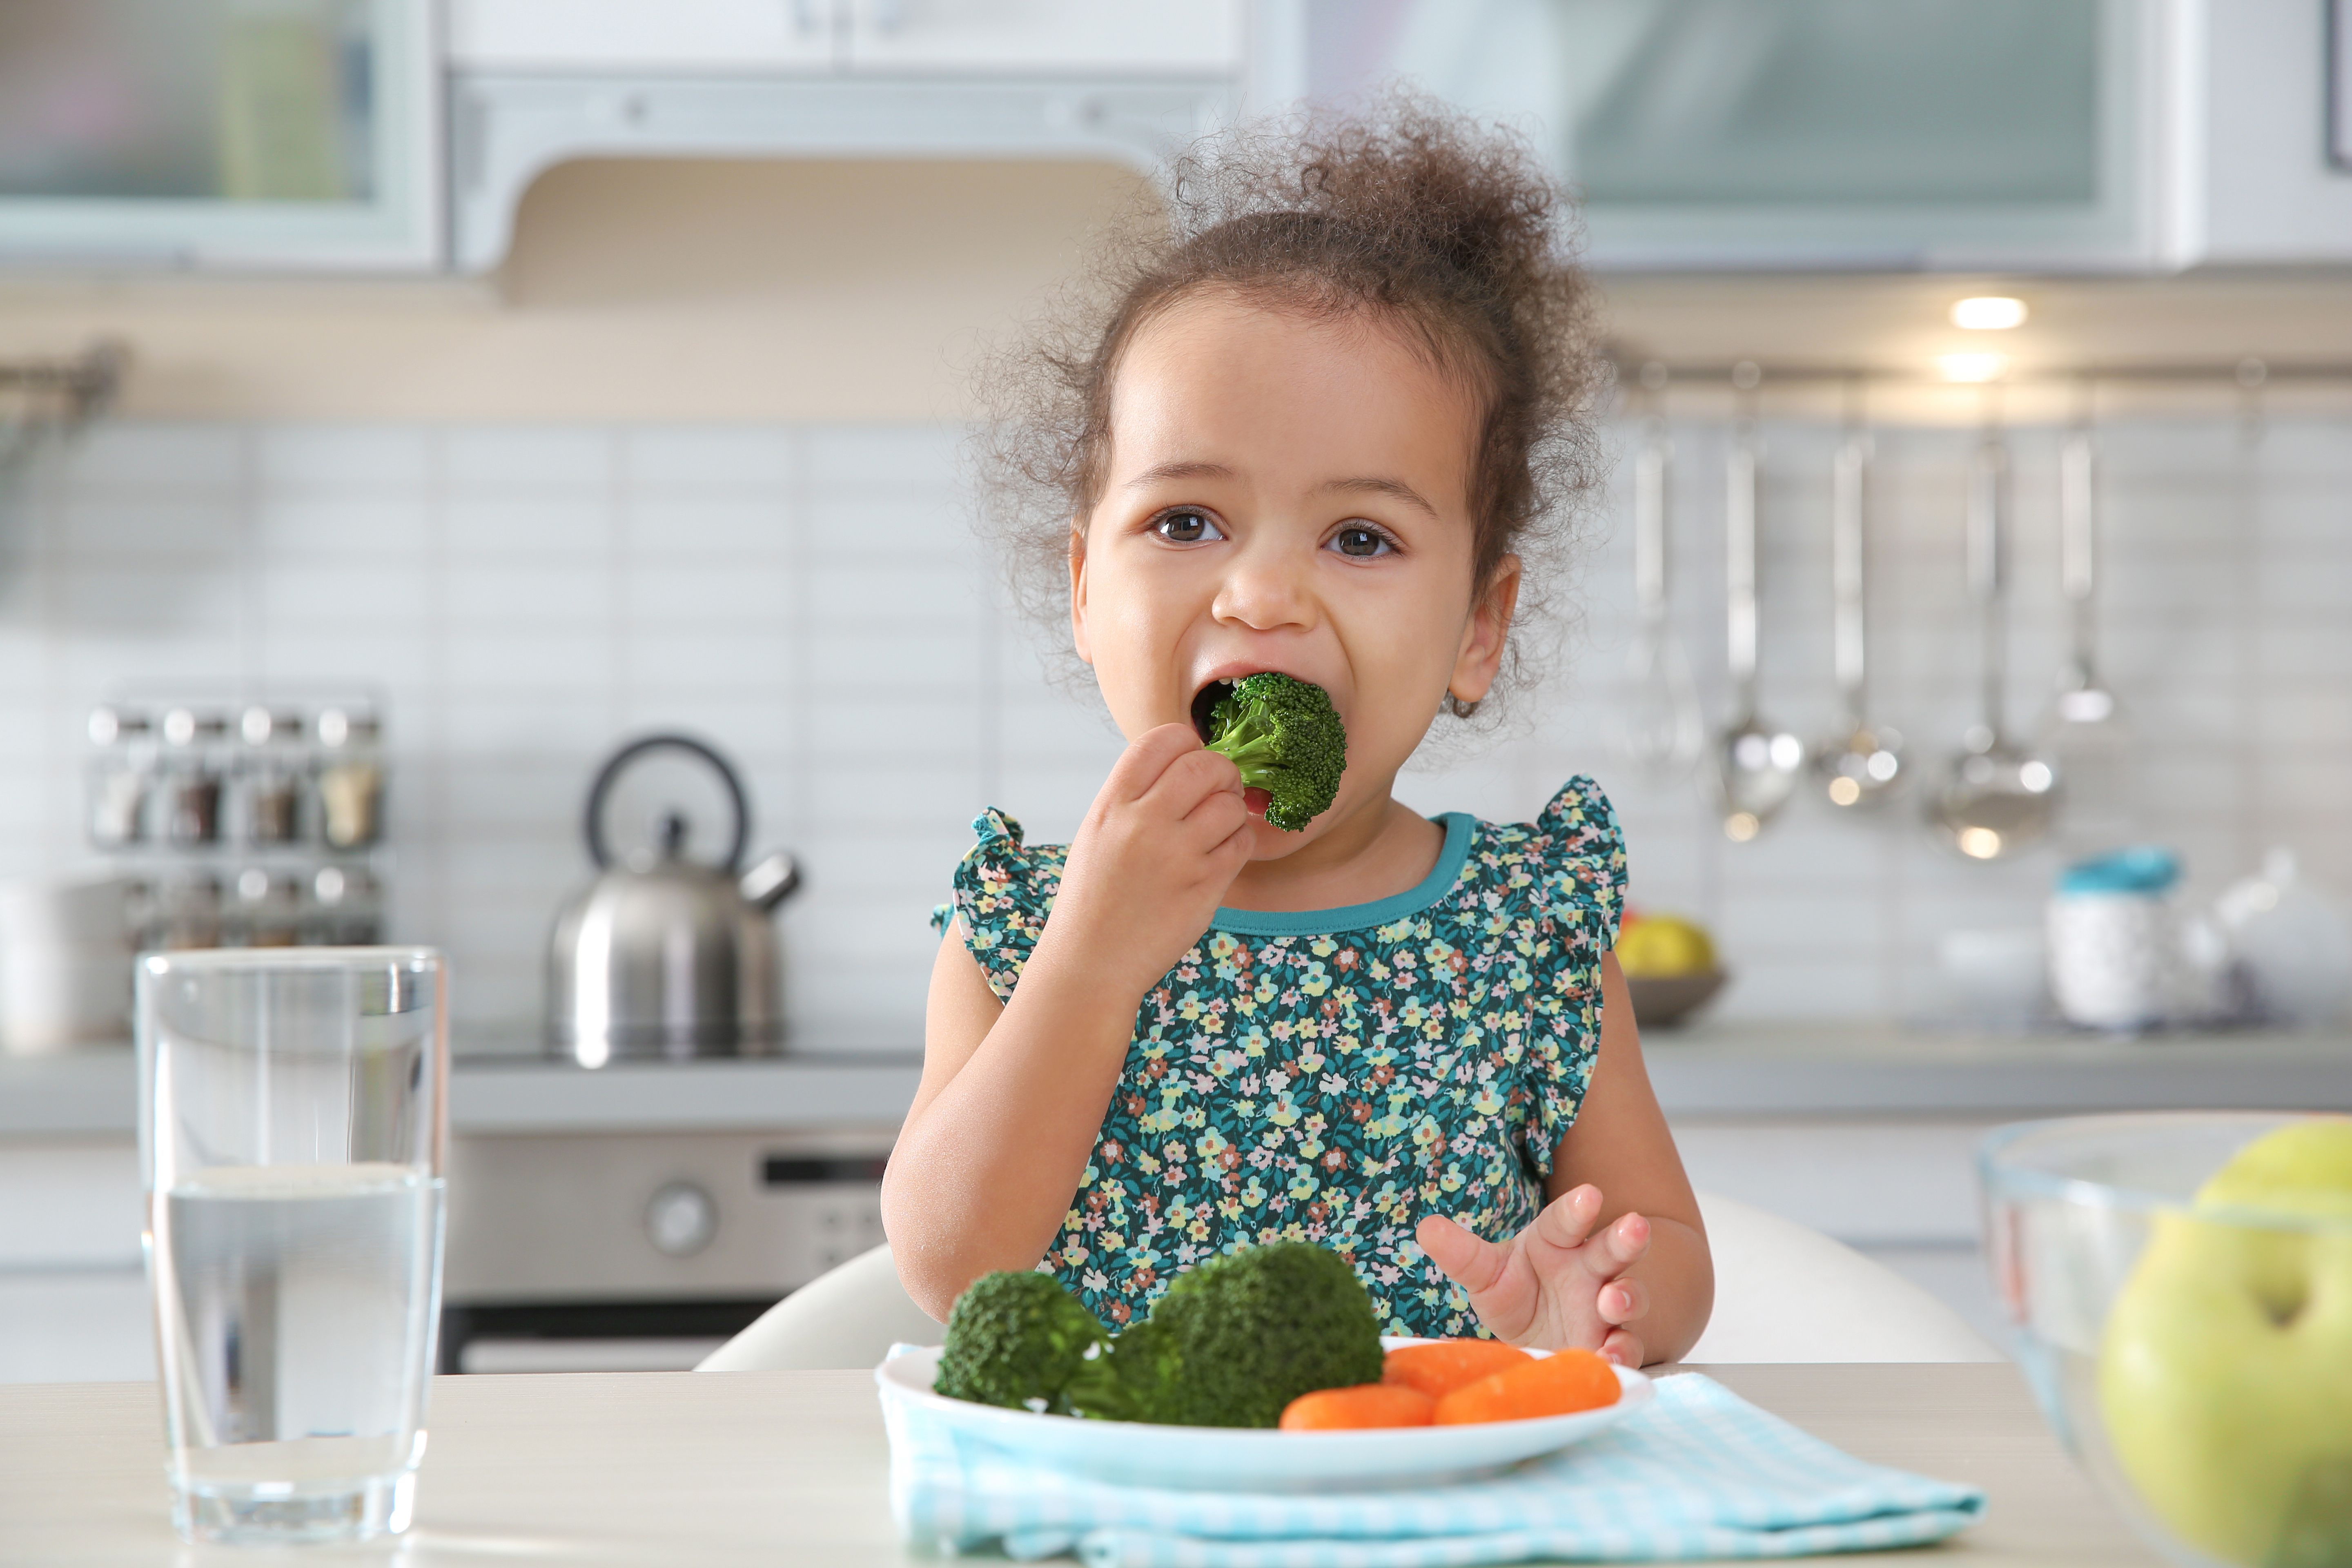 toddler eating broccoli